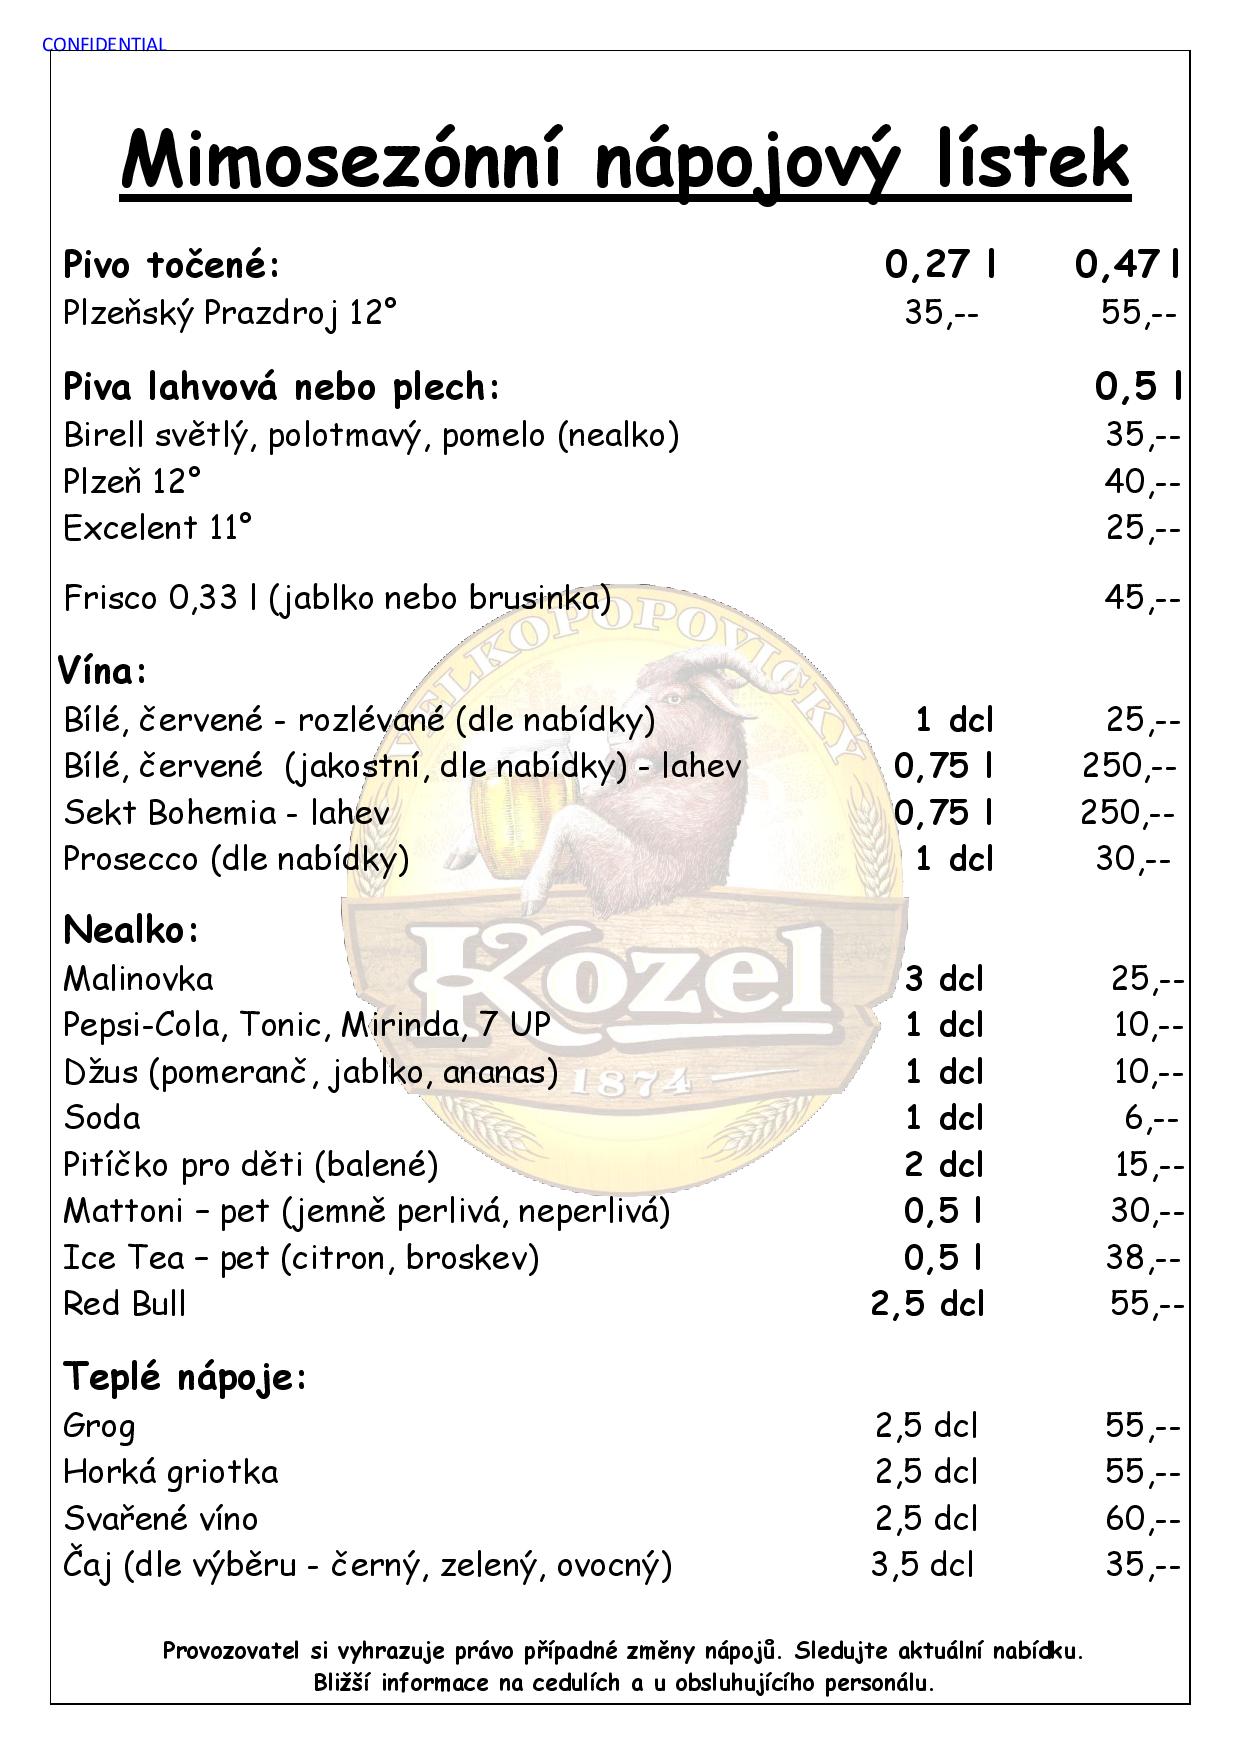 Napojovy-listek-a5-2023-mimosezonni-page-001